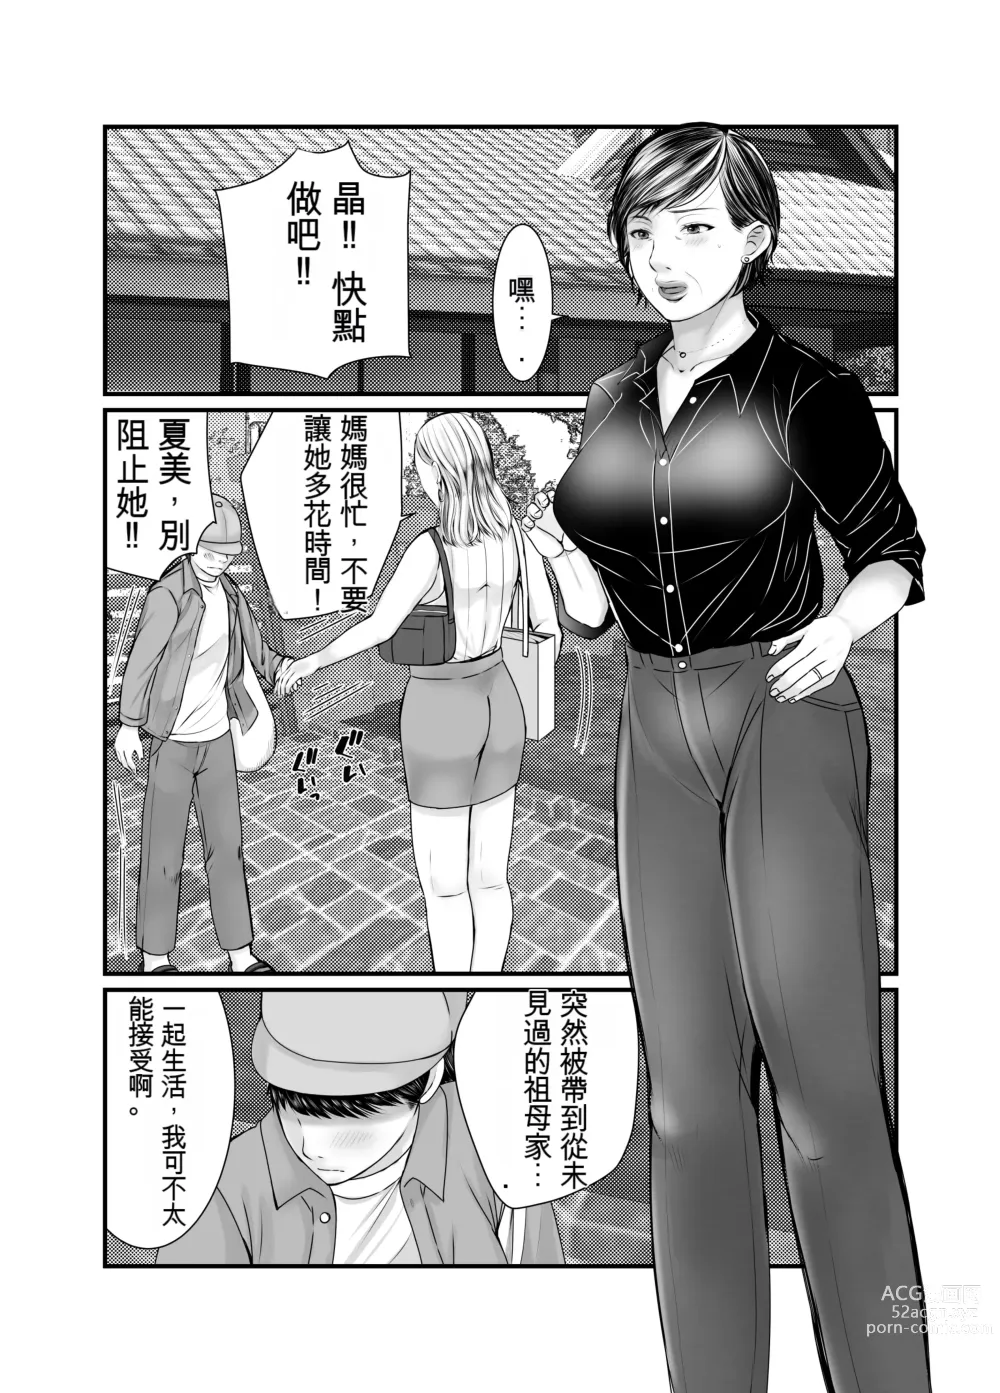 Page 2 of manga 祖母與孫子 ~孫子的第一次被內射的那一天~